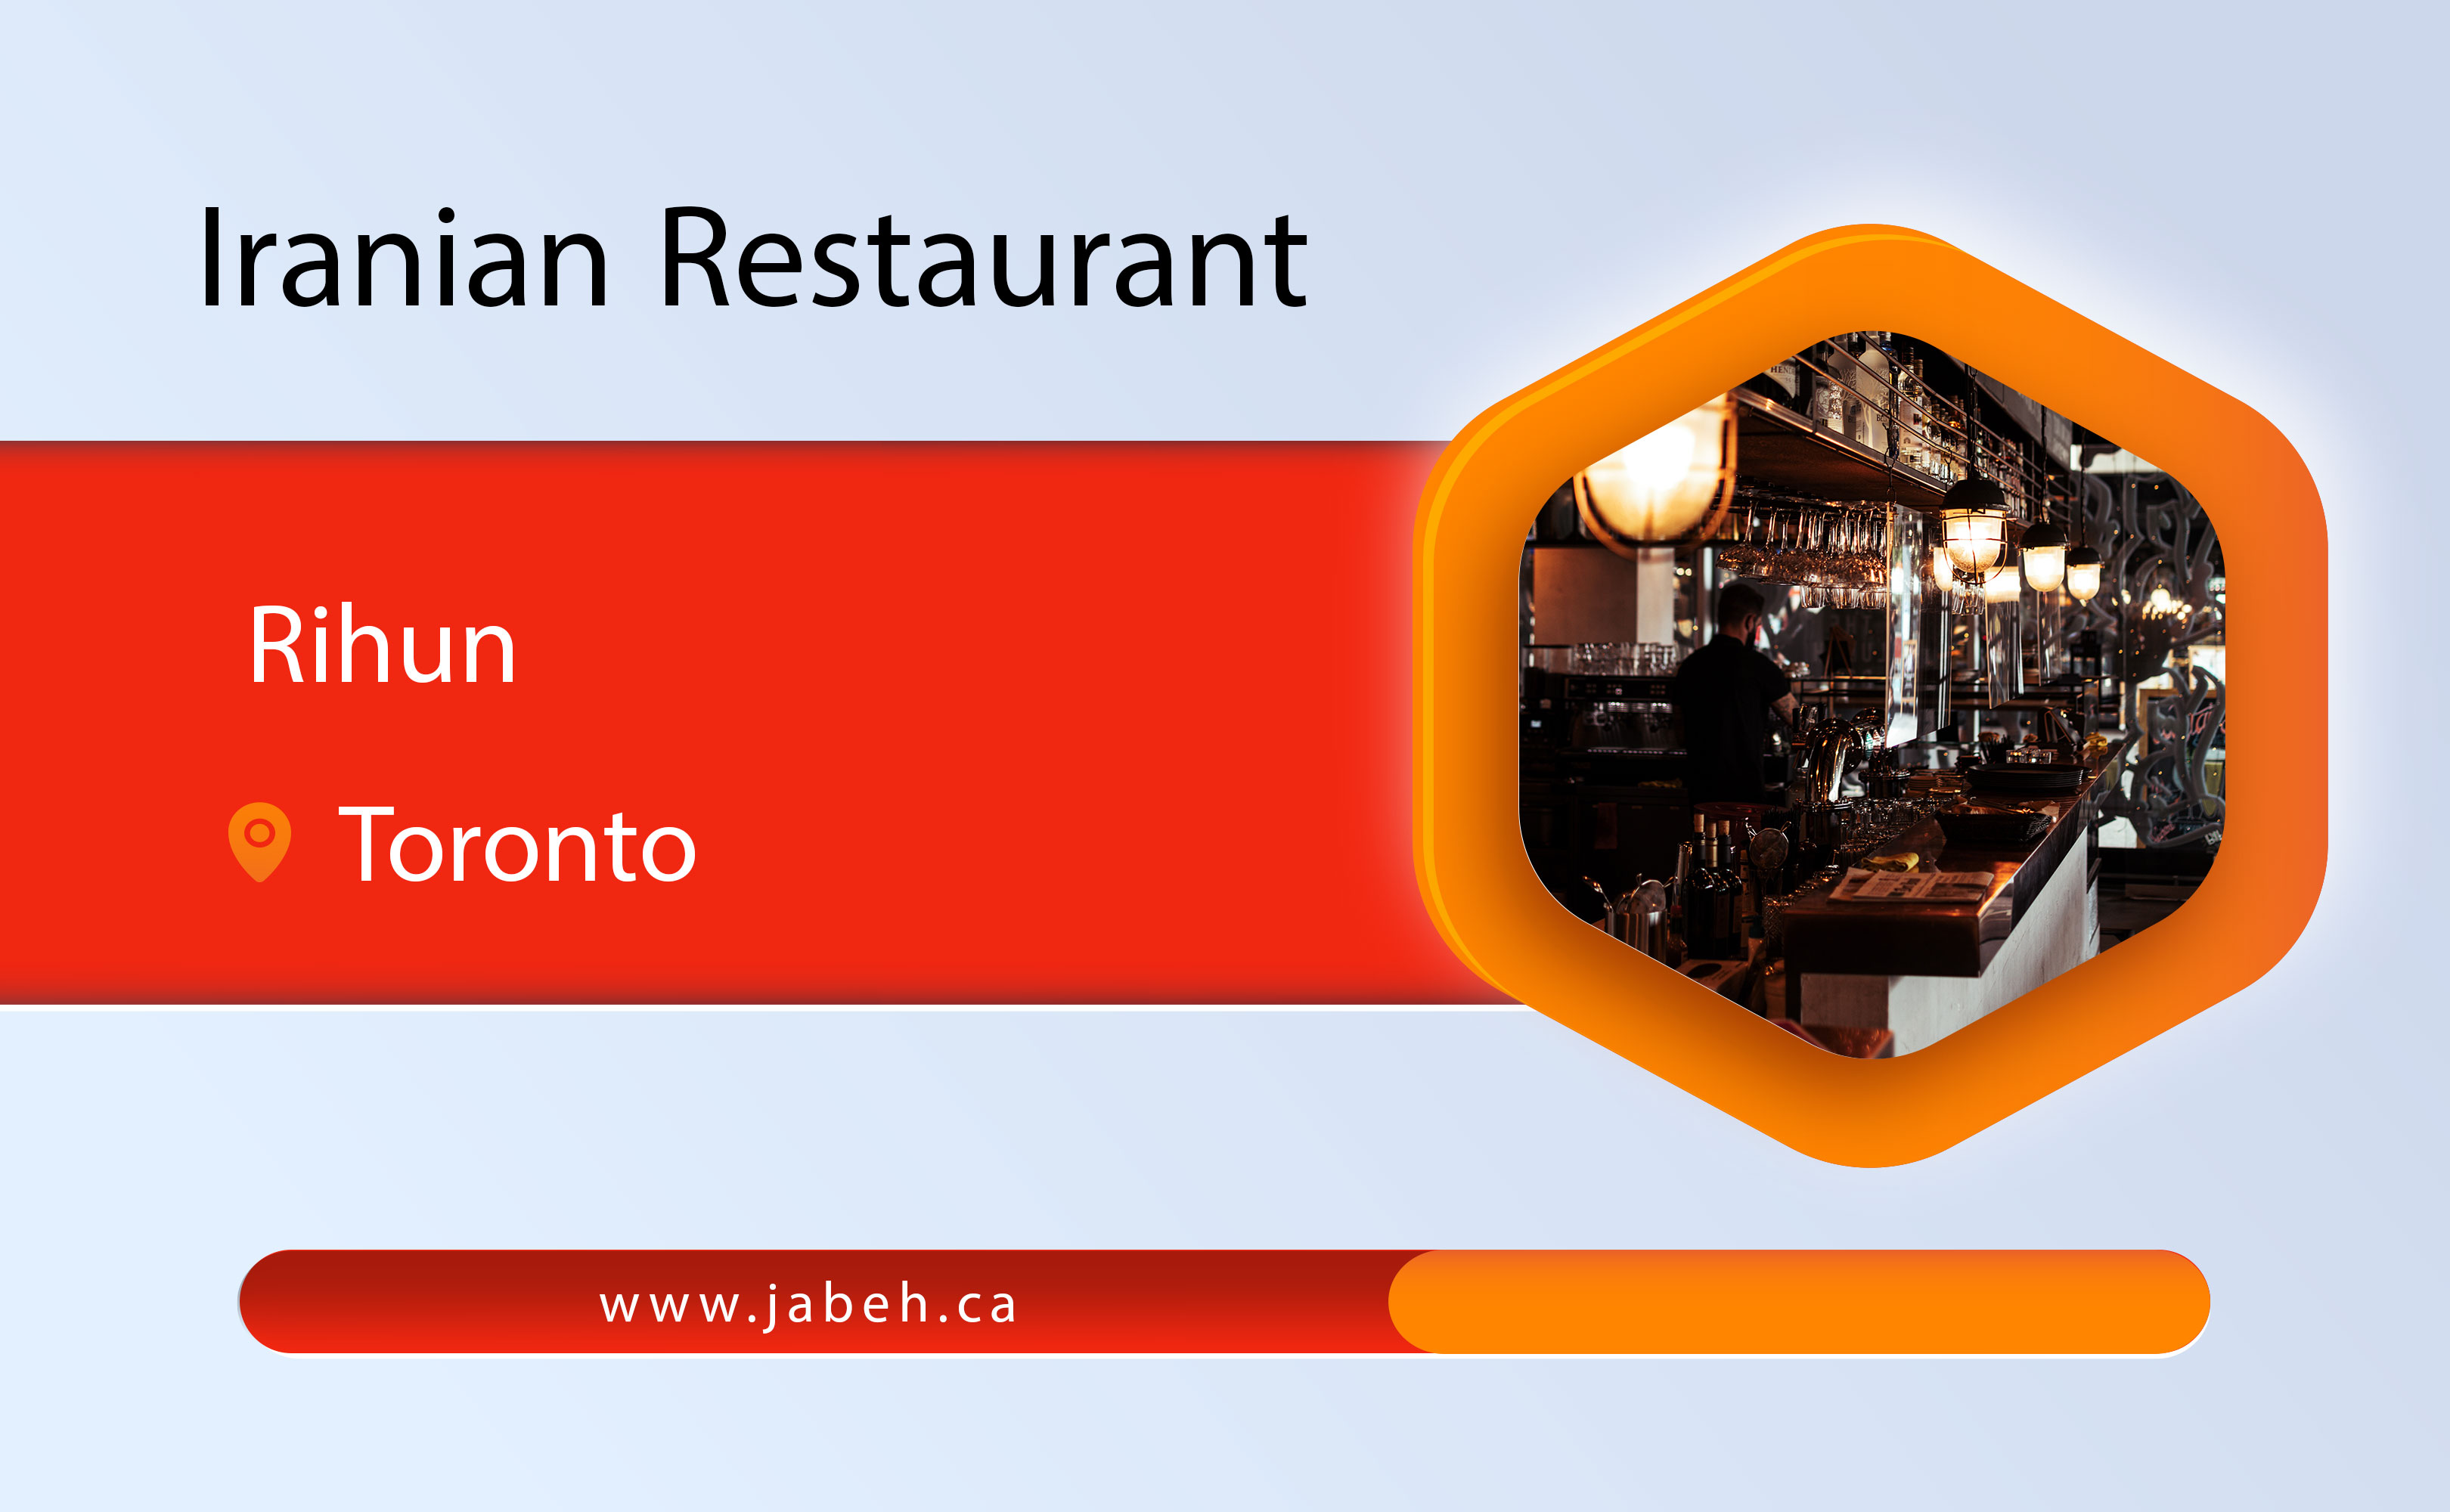 Rihun Iranian restaurant in Toronto